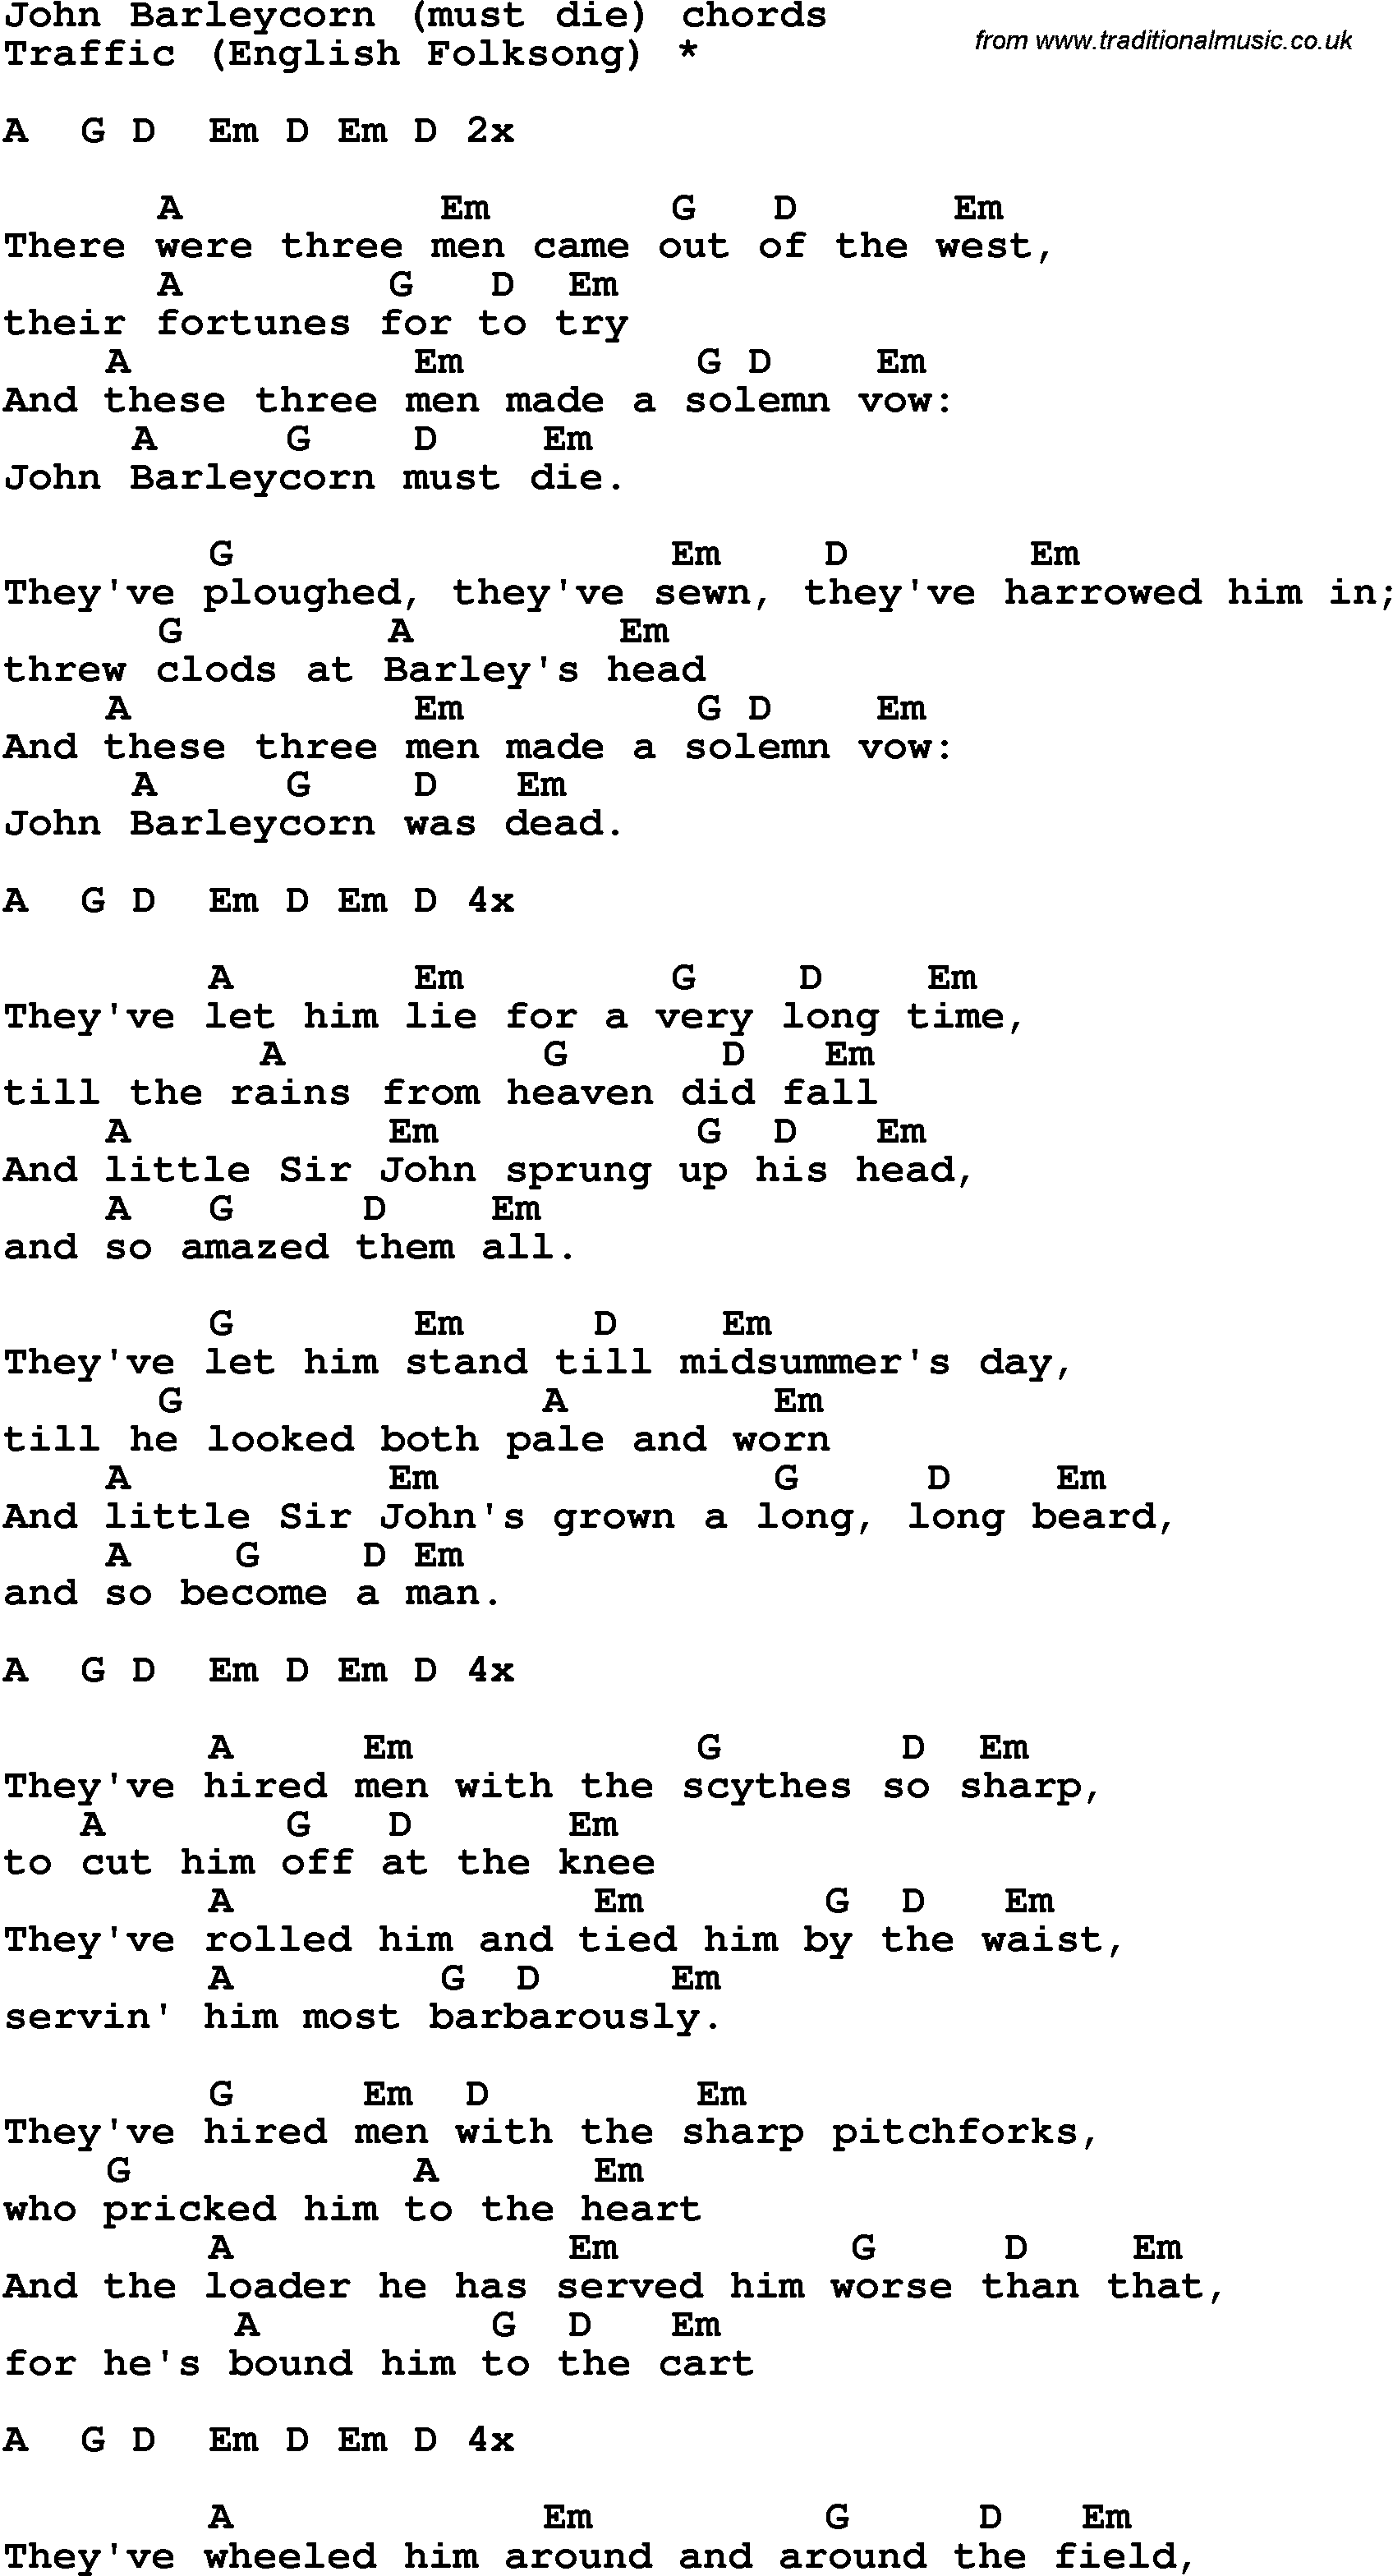 Song Lyrics with guitar chords for John Barleycorn